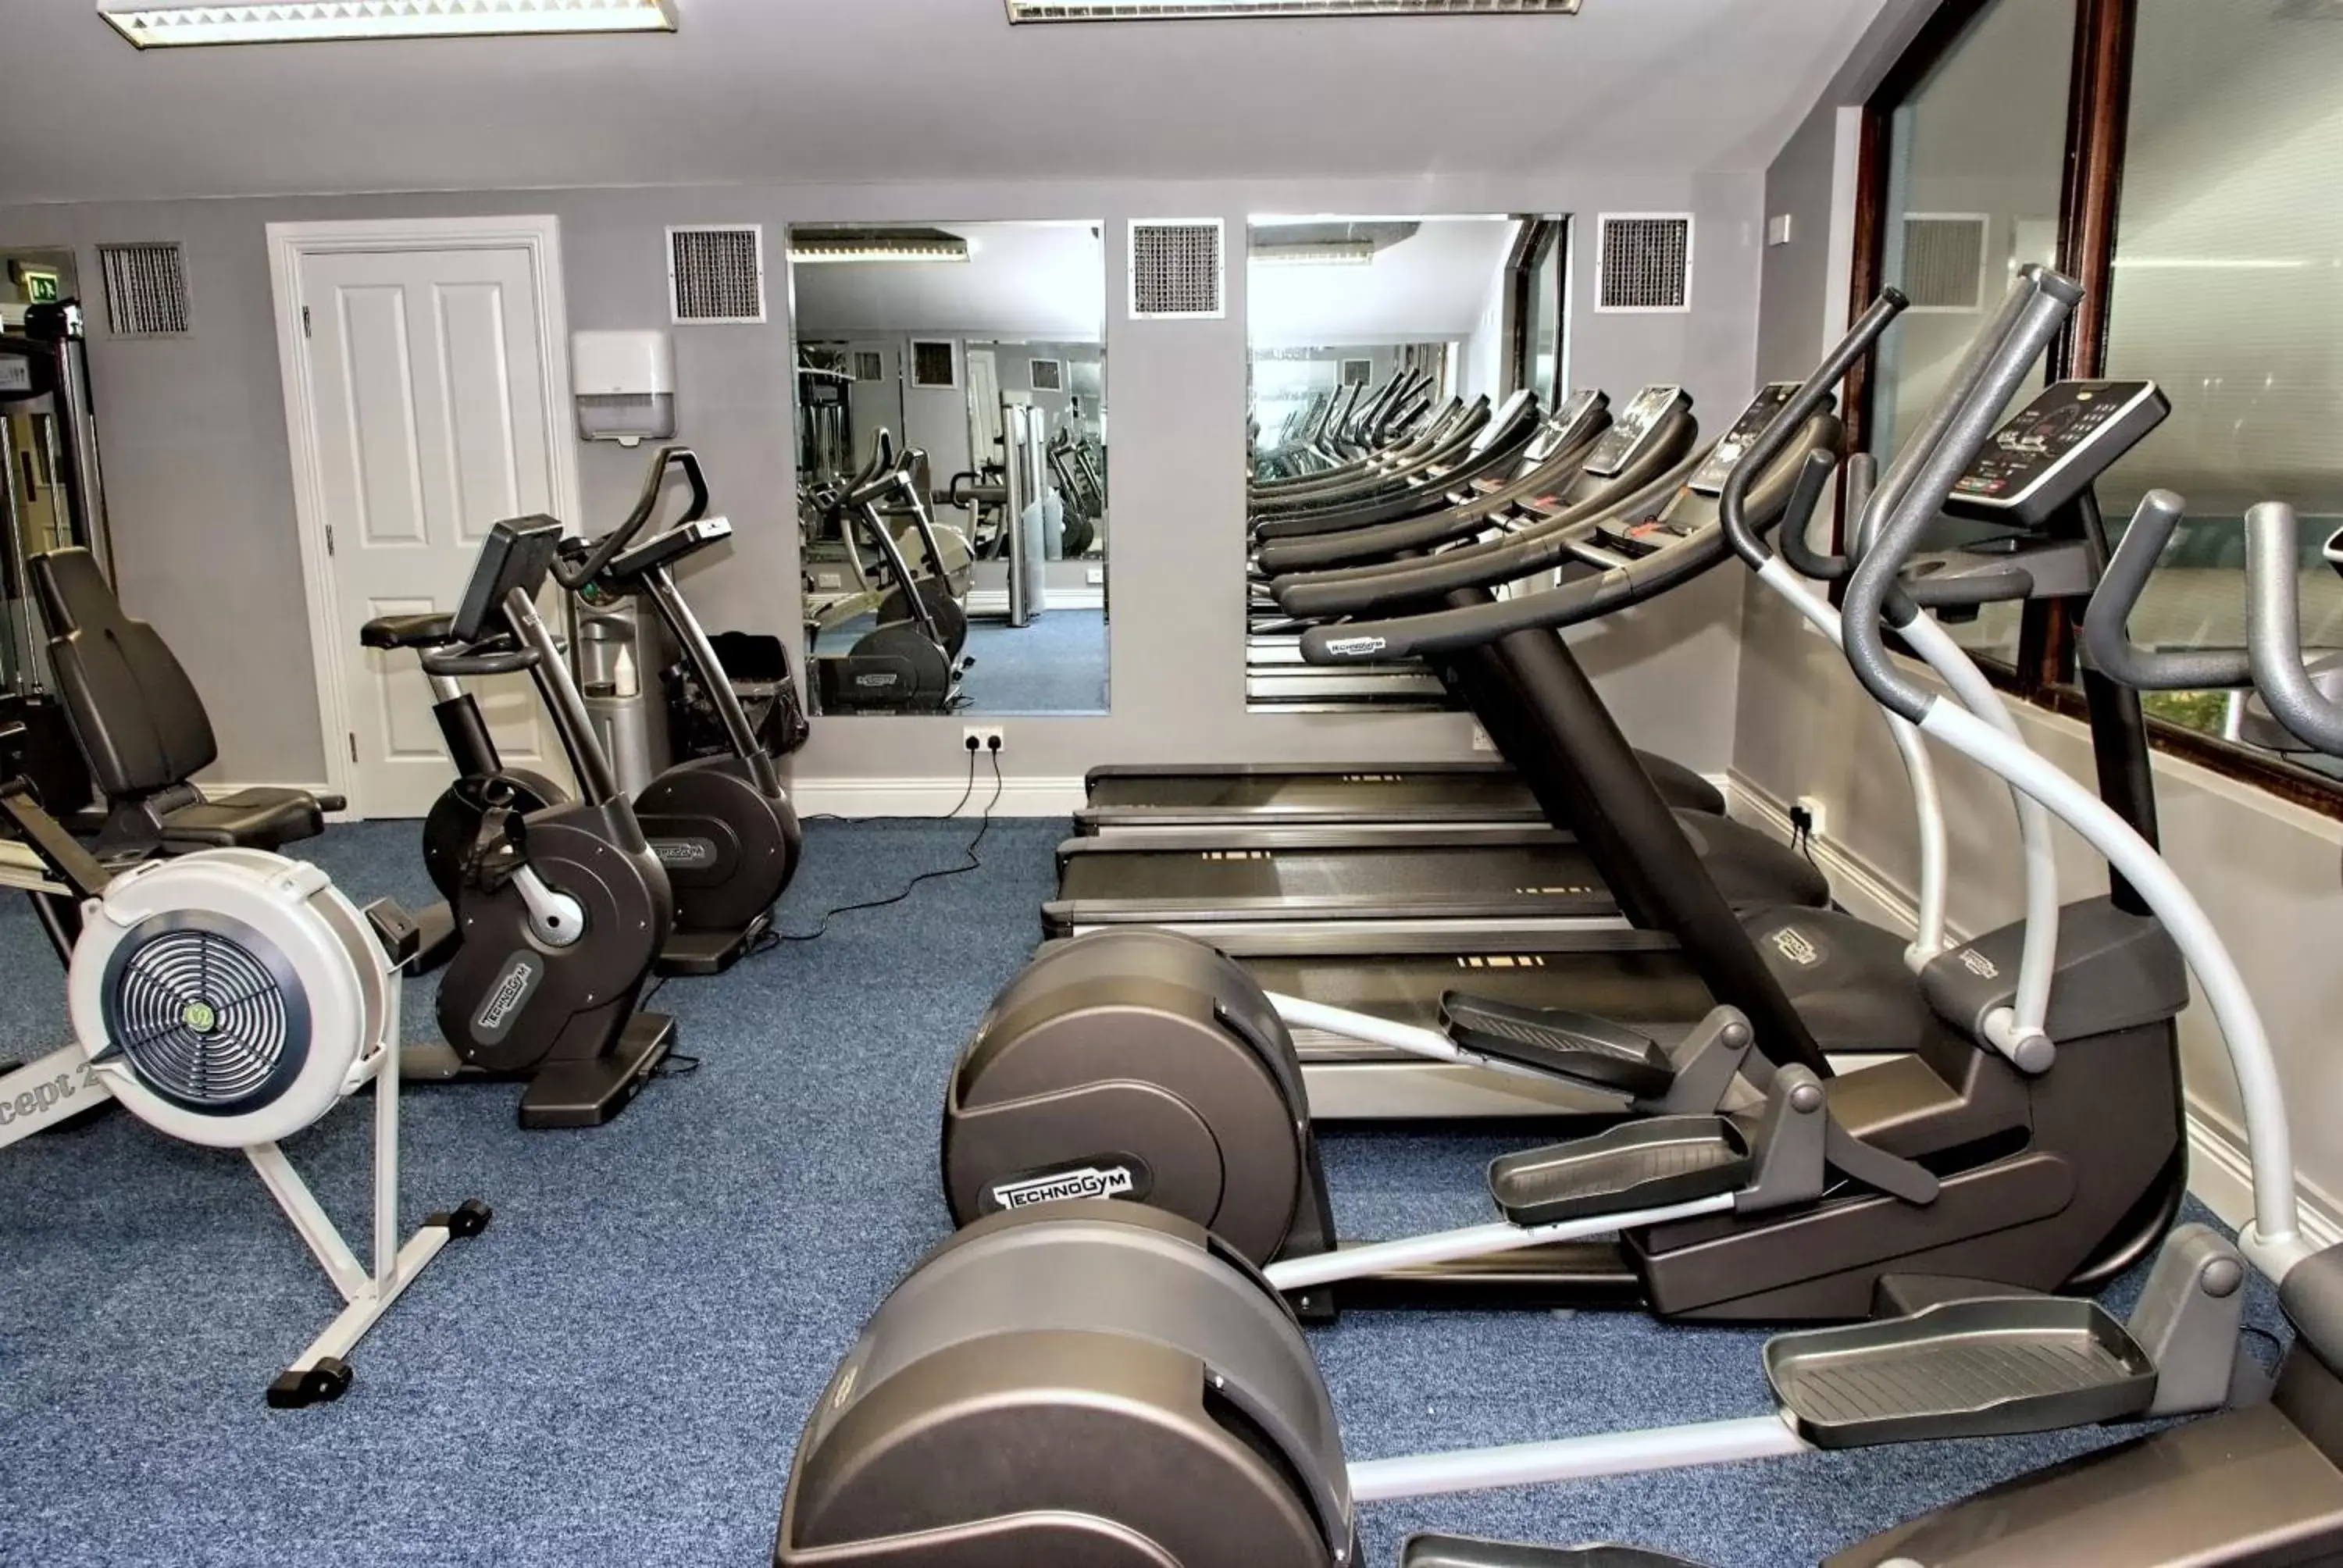 Fitness centre/facilities, Fitness Center/Facilities in Hotel Woodstock Ennis